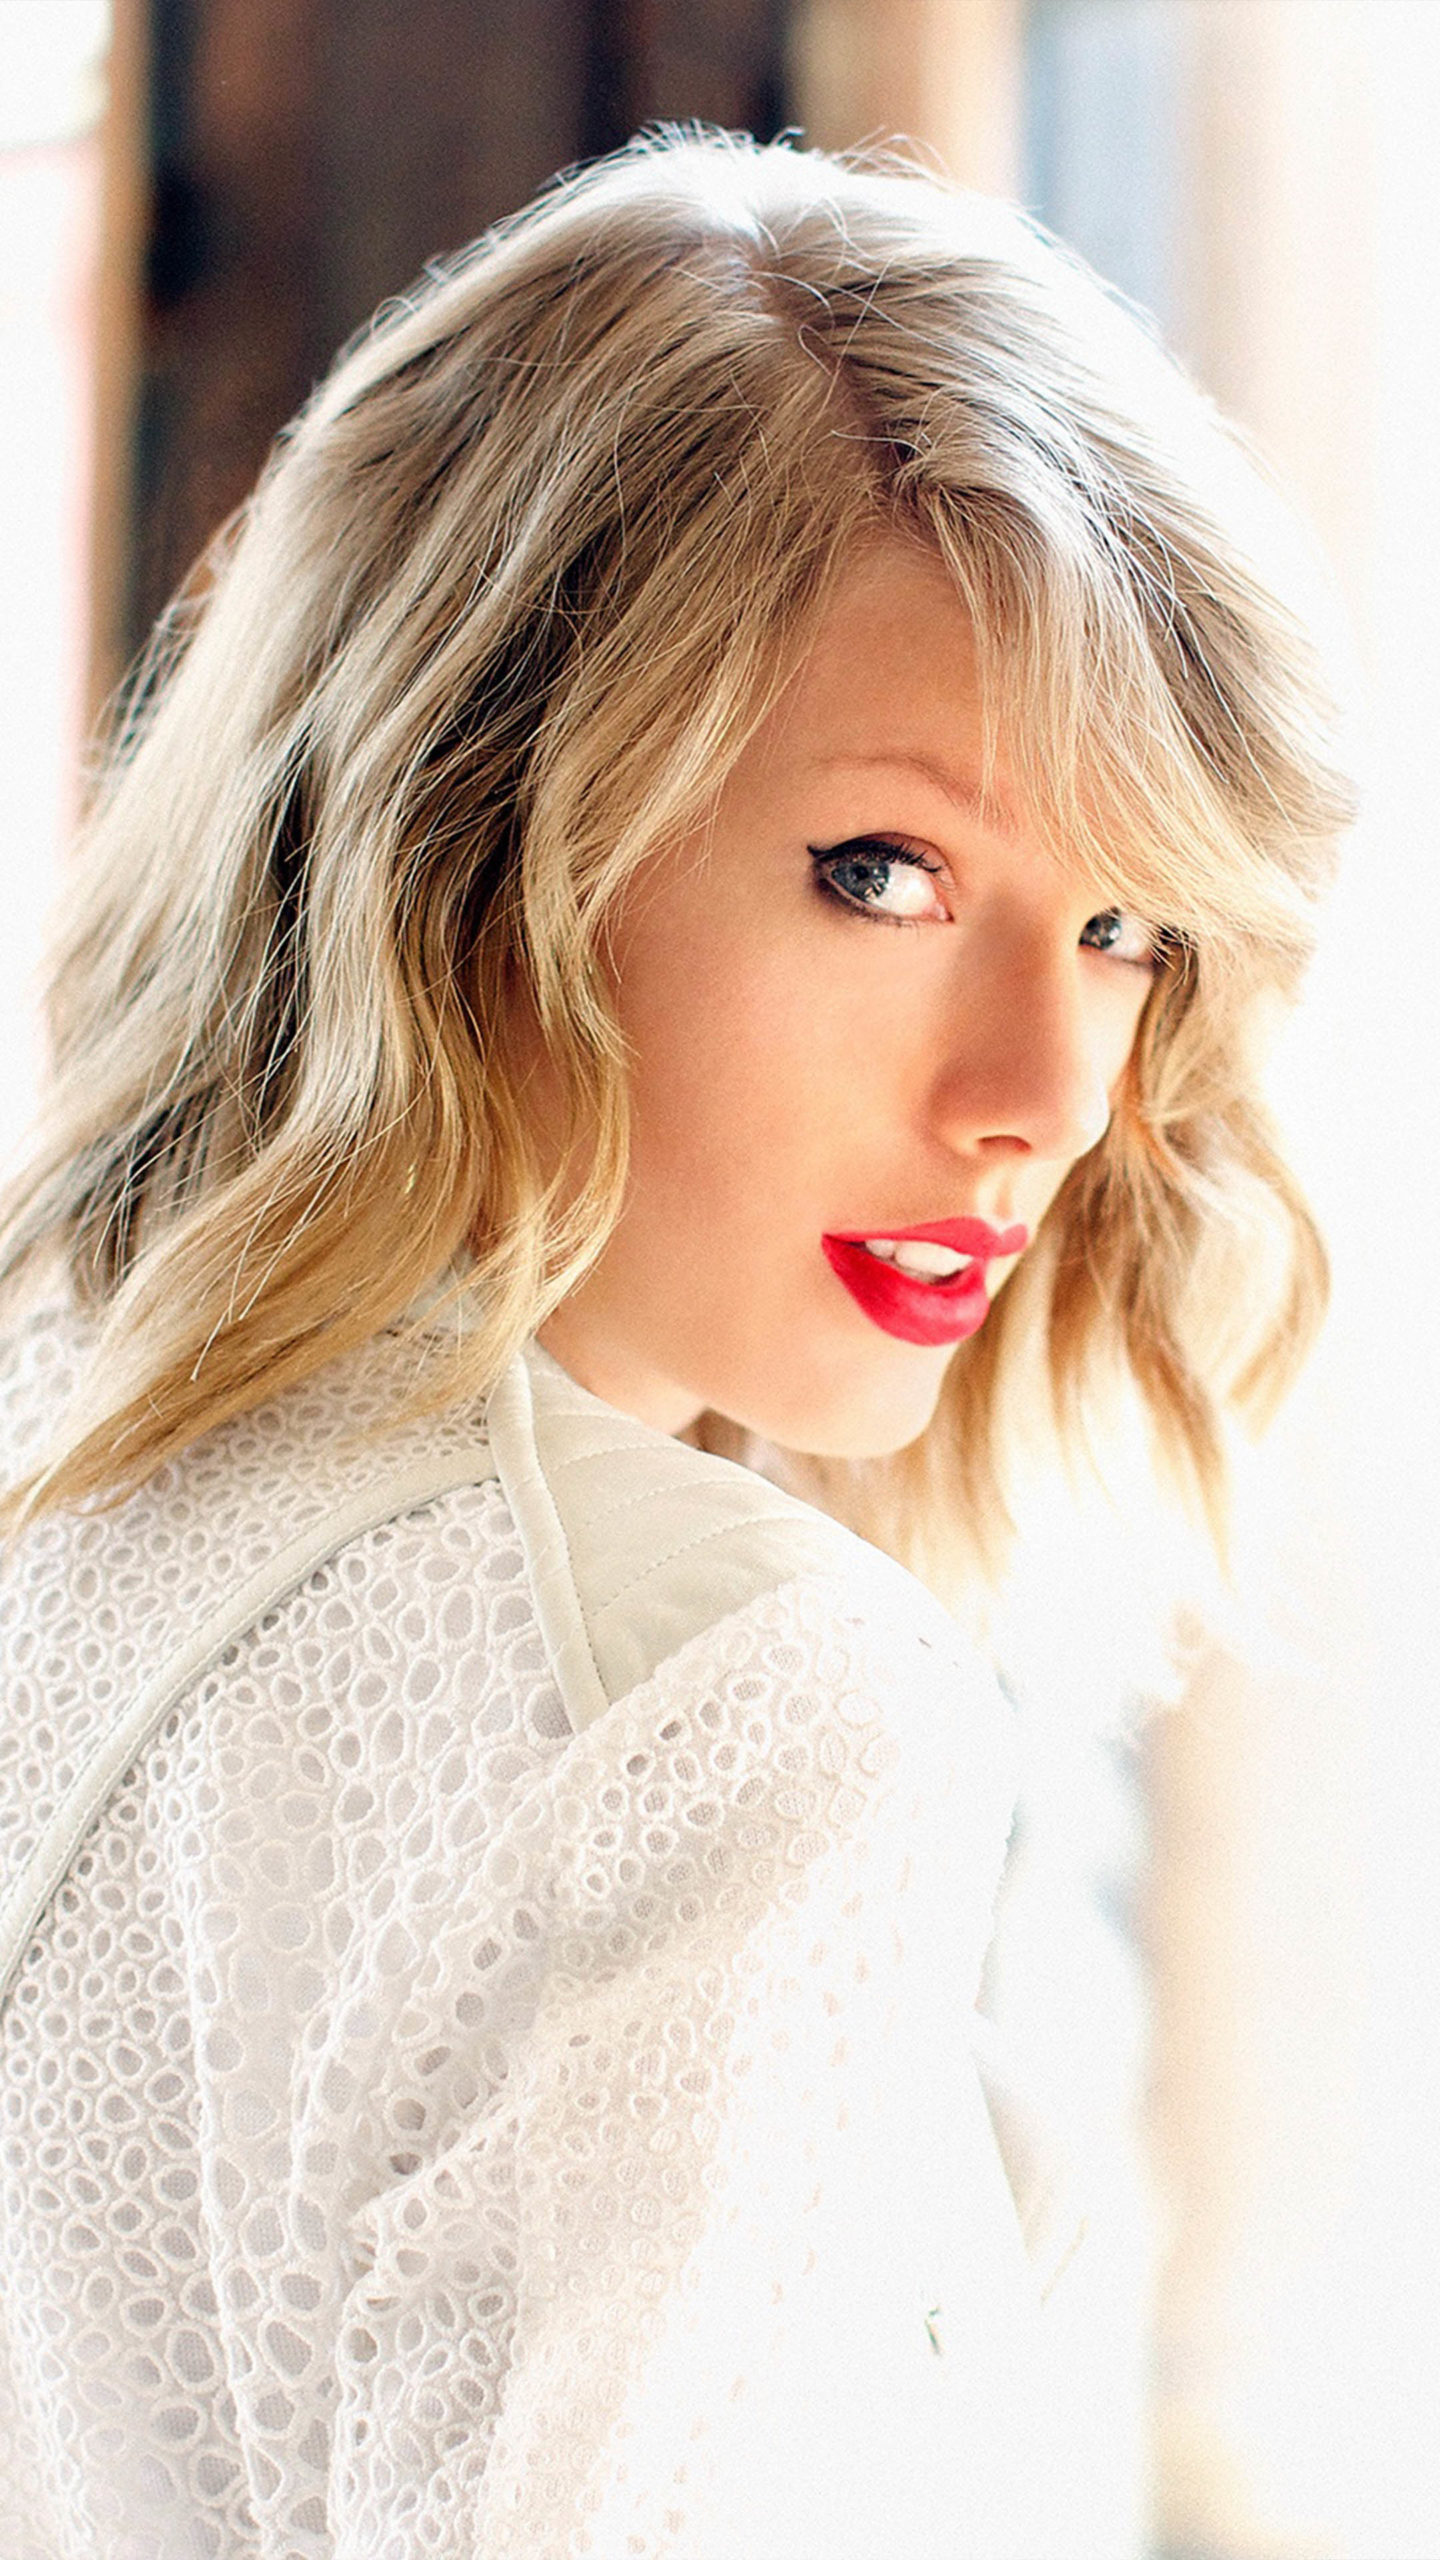 Singer Taylor Swift White Dress Blonde 4k Ultra HD Mobile Wallpaper